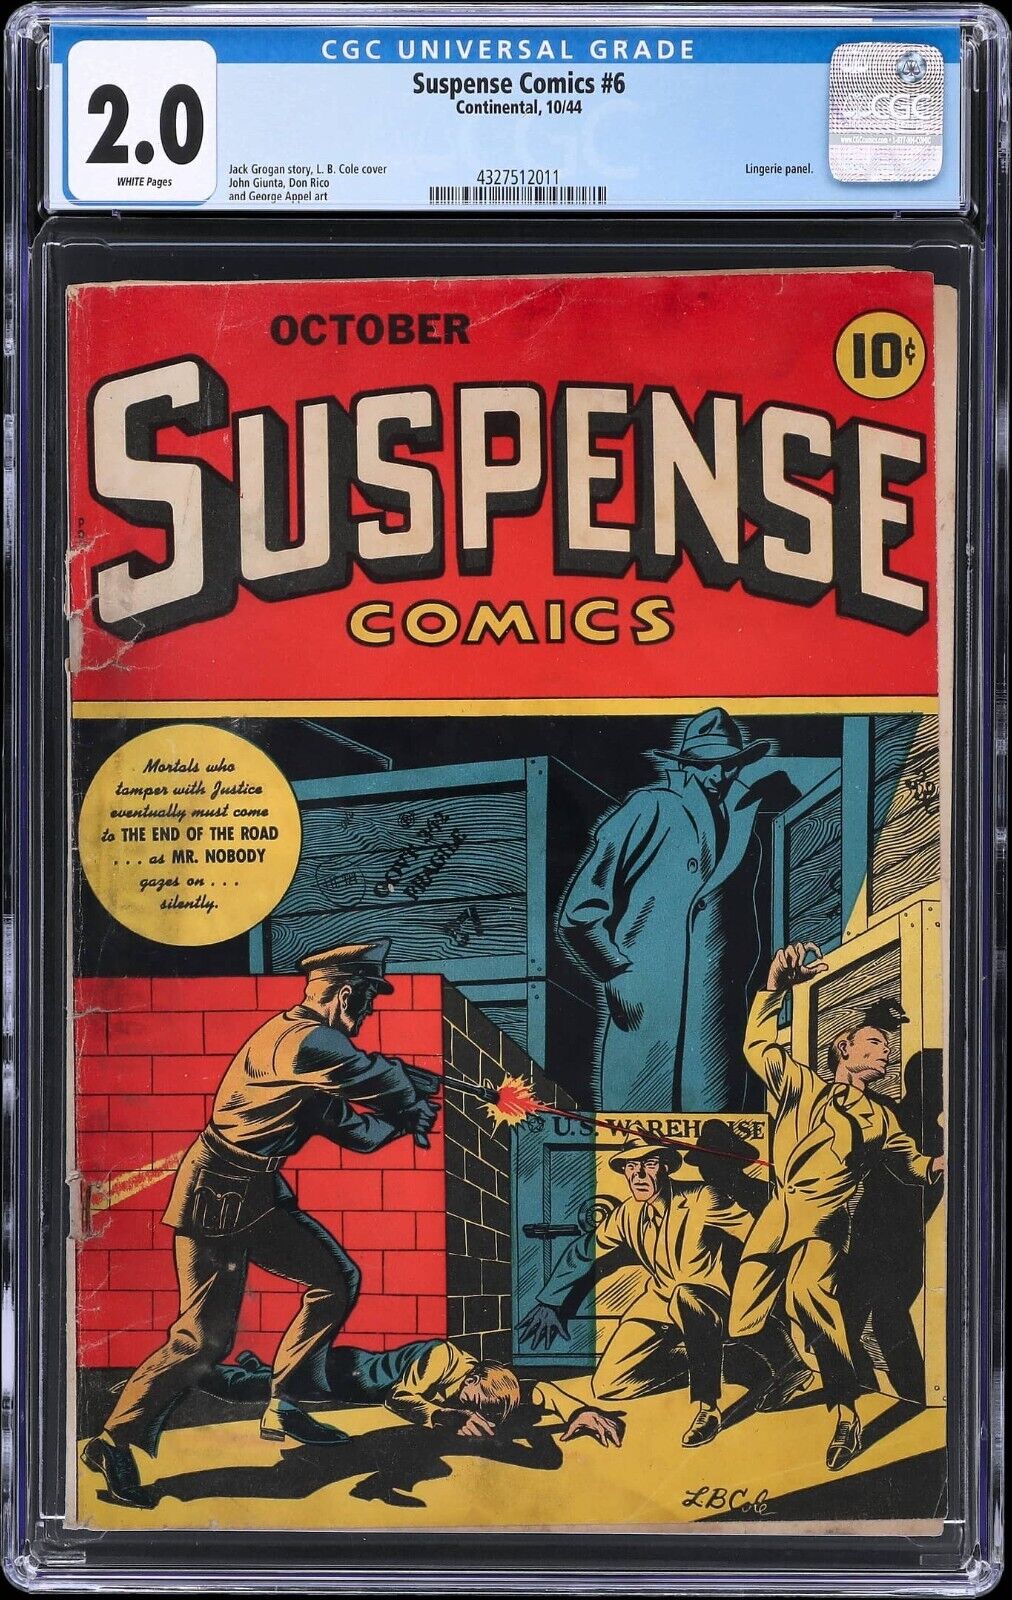 1944 Continental Suspense Comics #6 CGC 2.0 lingerie panel L.B. Cole cover